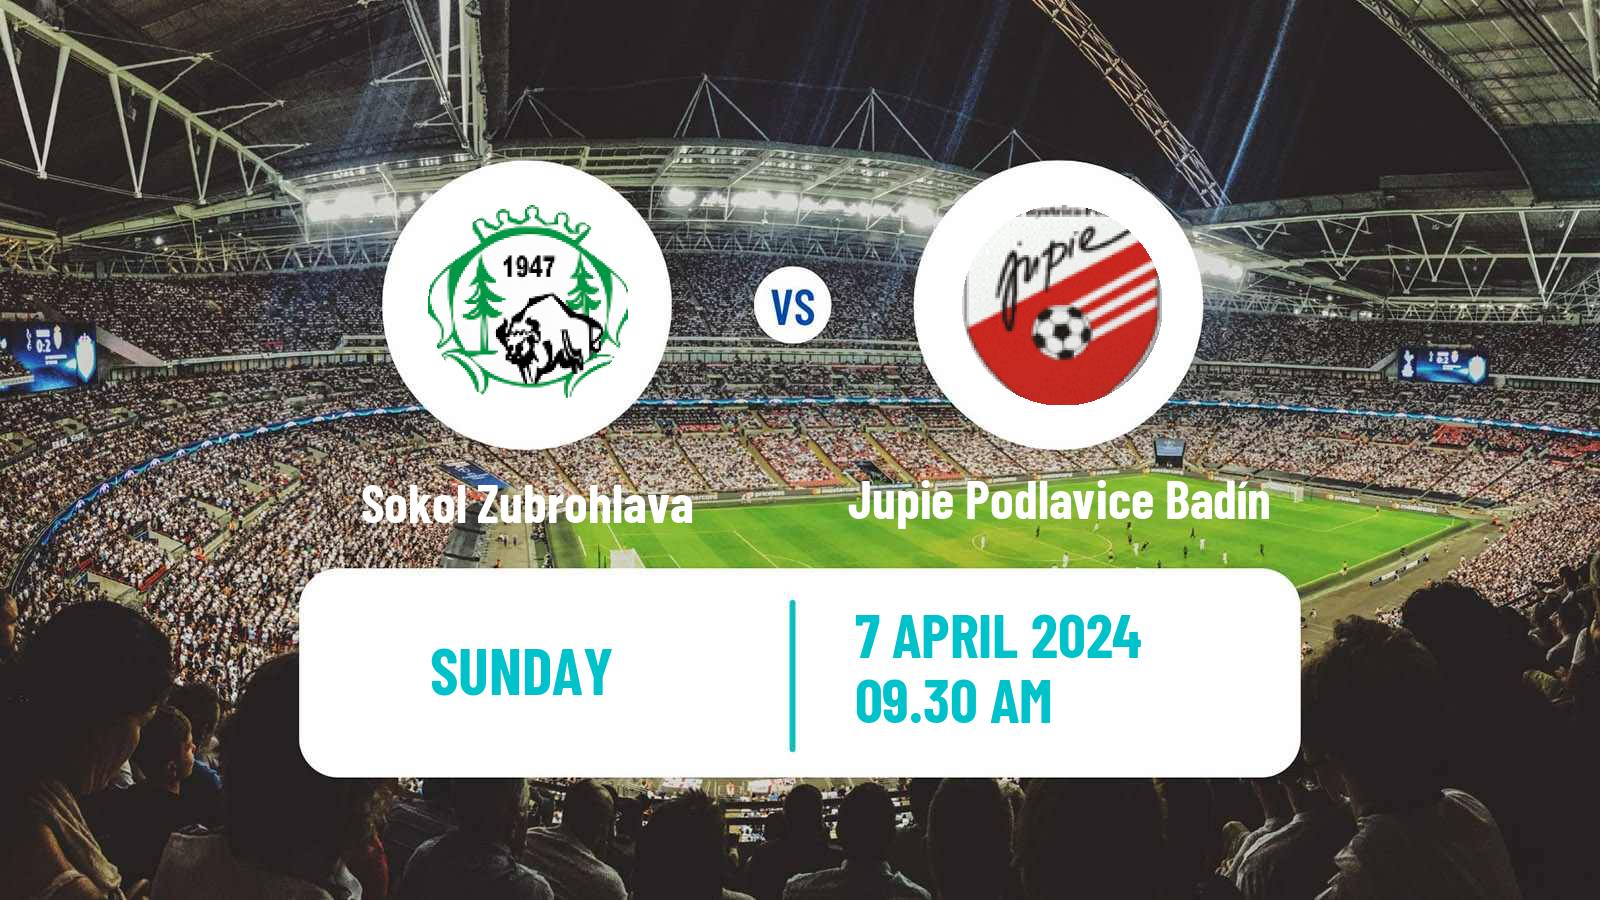 Soccer Slovak 4 Liga Central Sokol Zubrohlava - Jupie Podlavice Badín